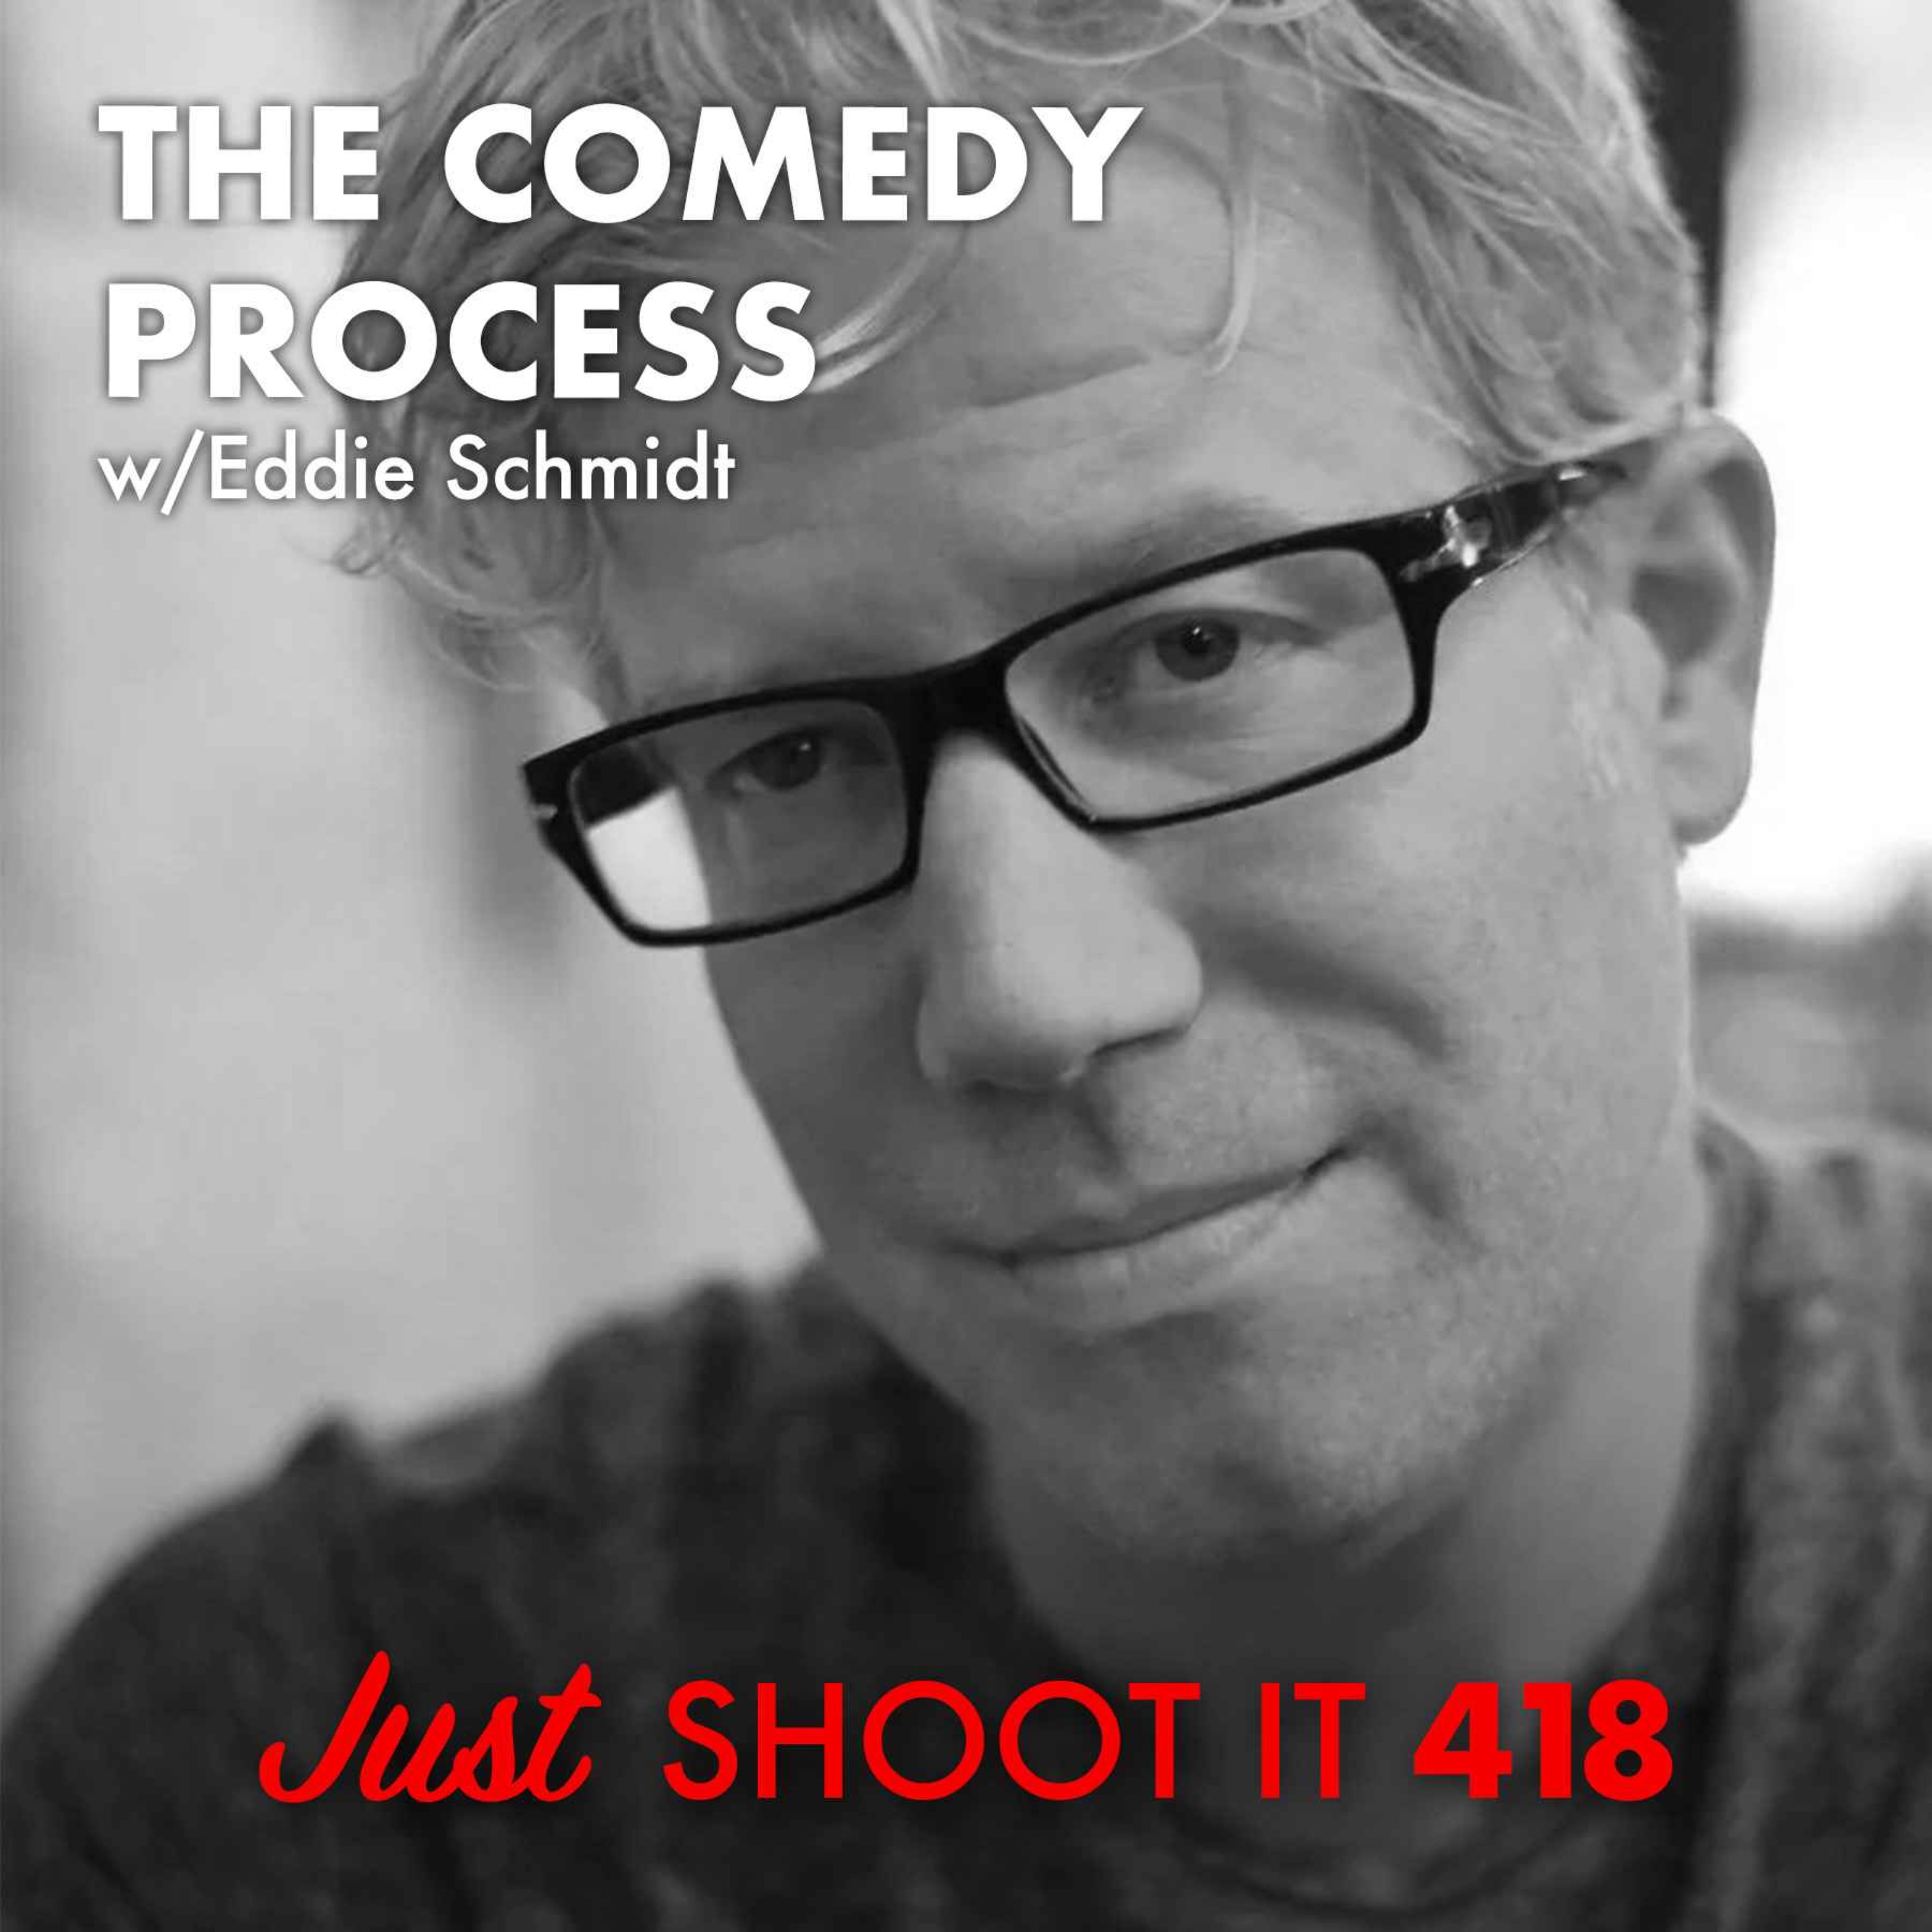 The Comedy Process w/Eddie Schmidt - Just Shoot It 418